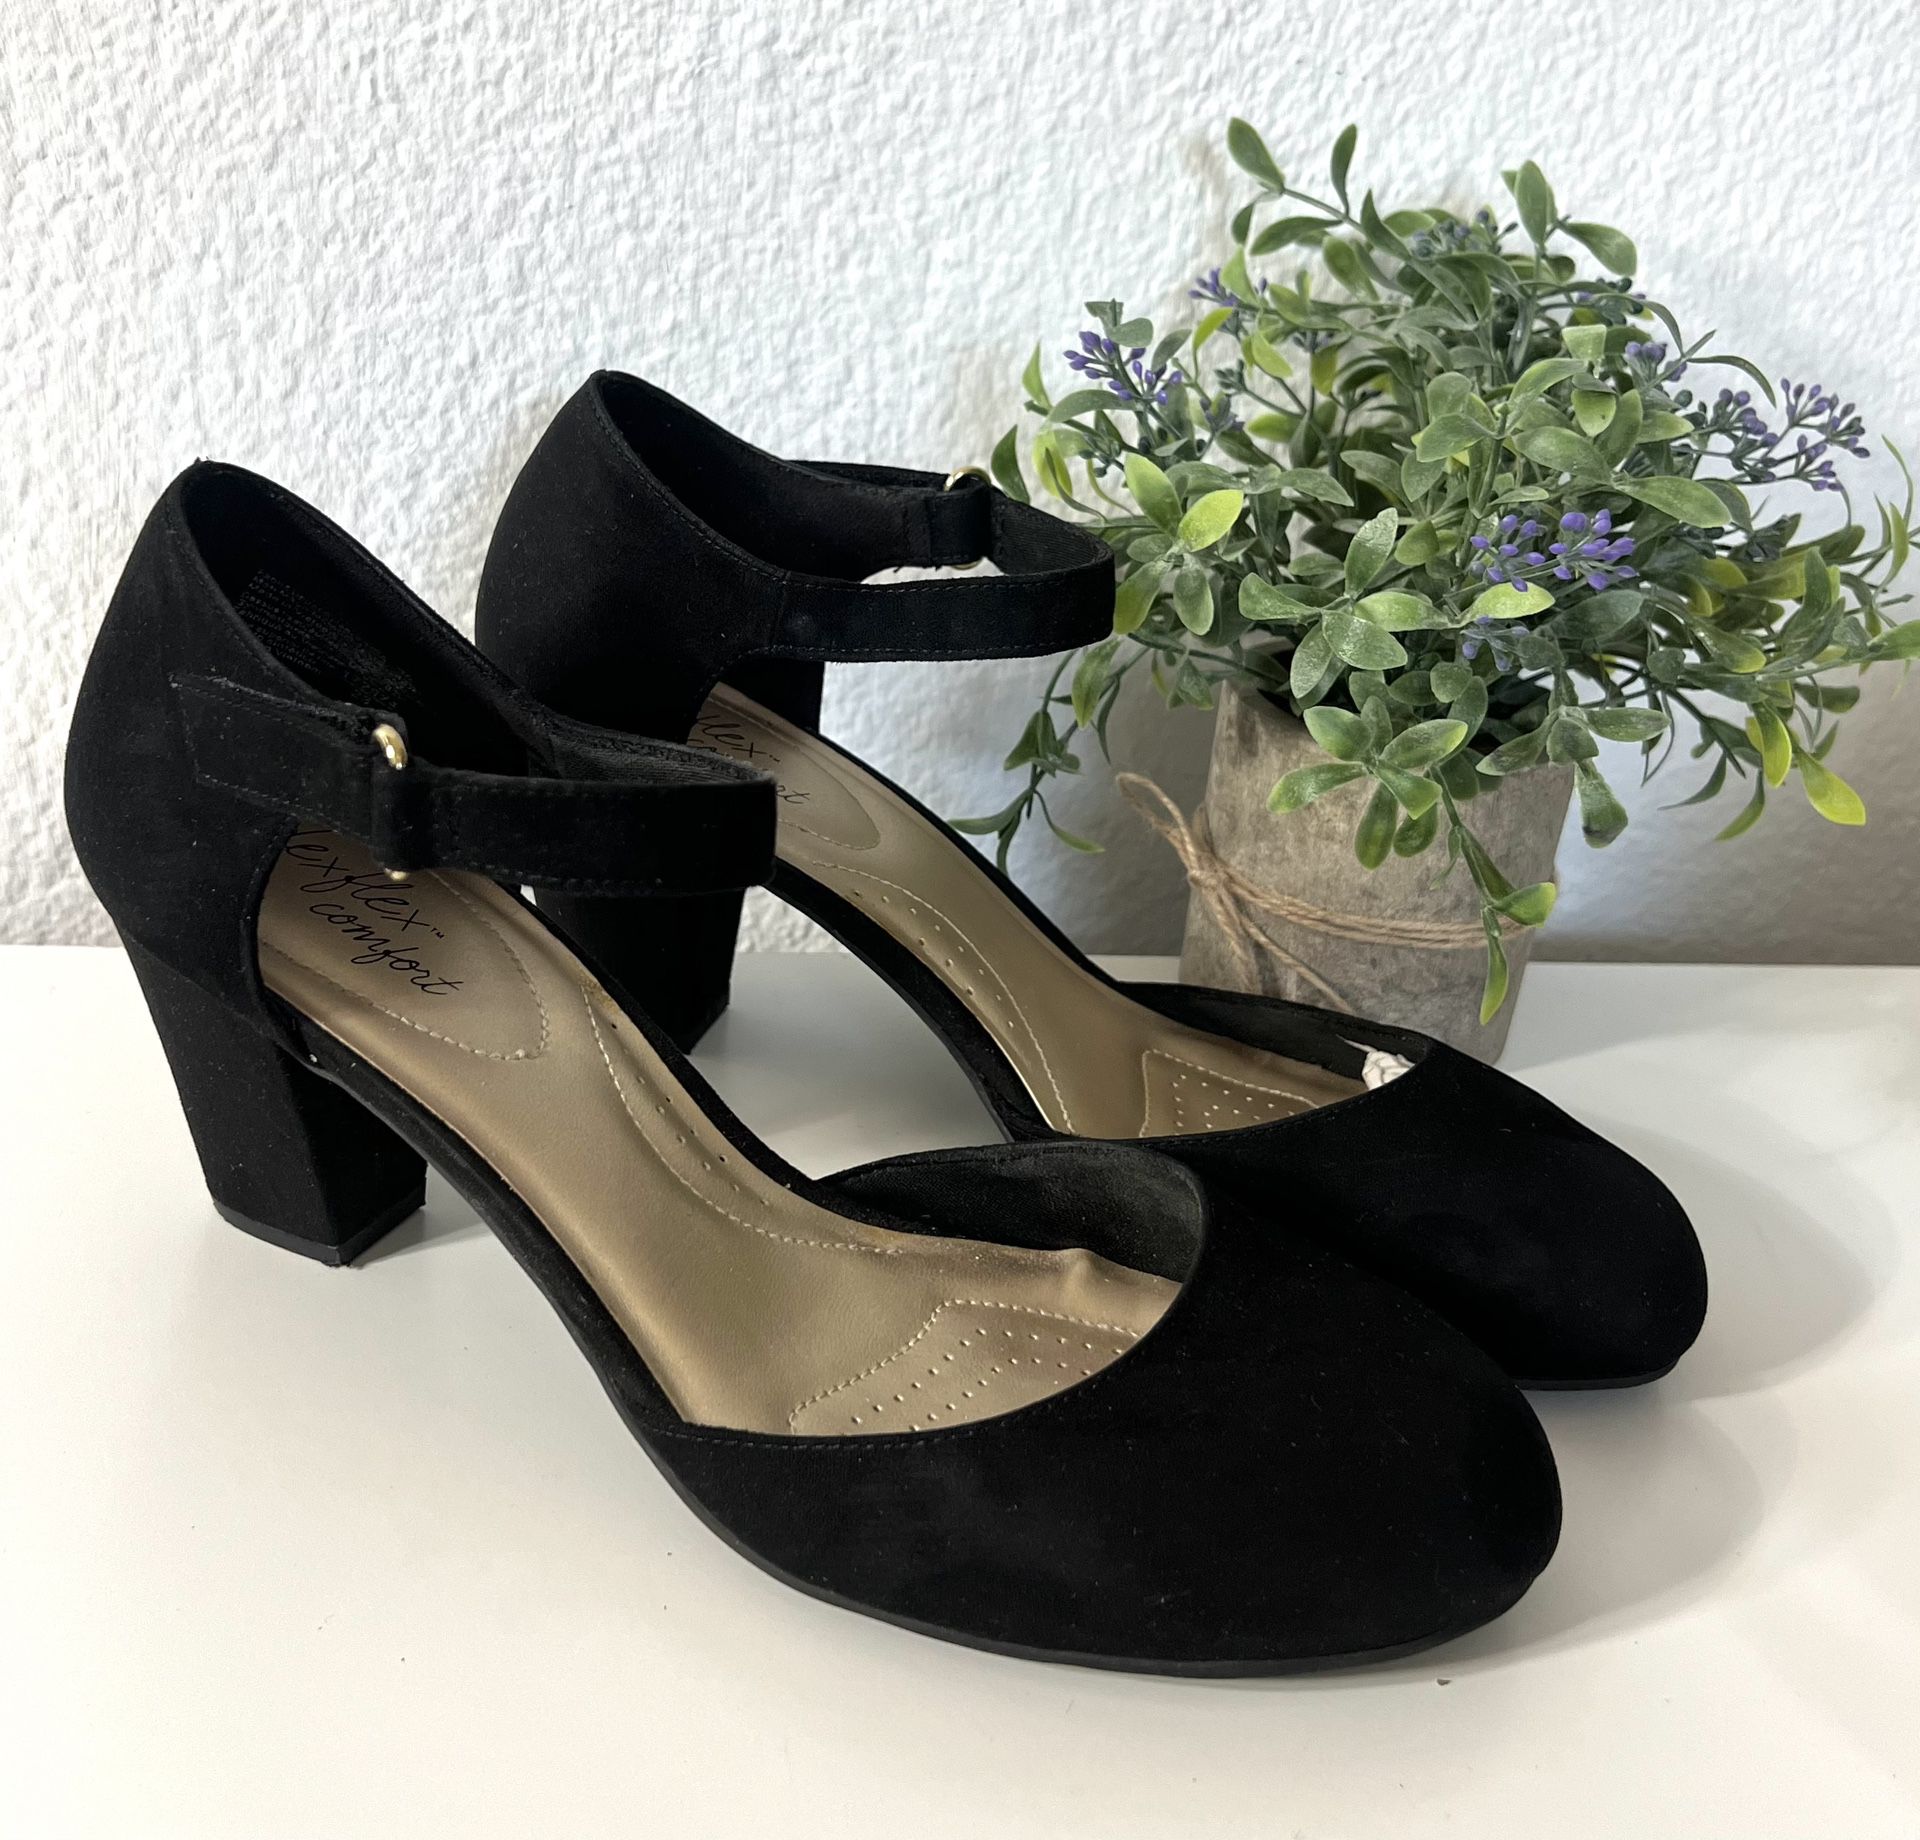 DexFlex Comfort Black Suede Heel Pump Shoes Womens 10 Shoes Footwear Sandals